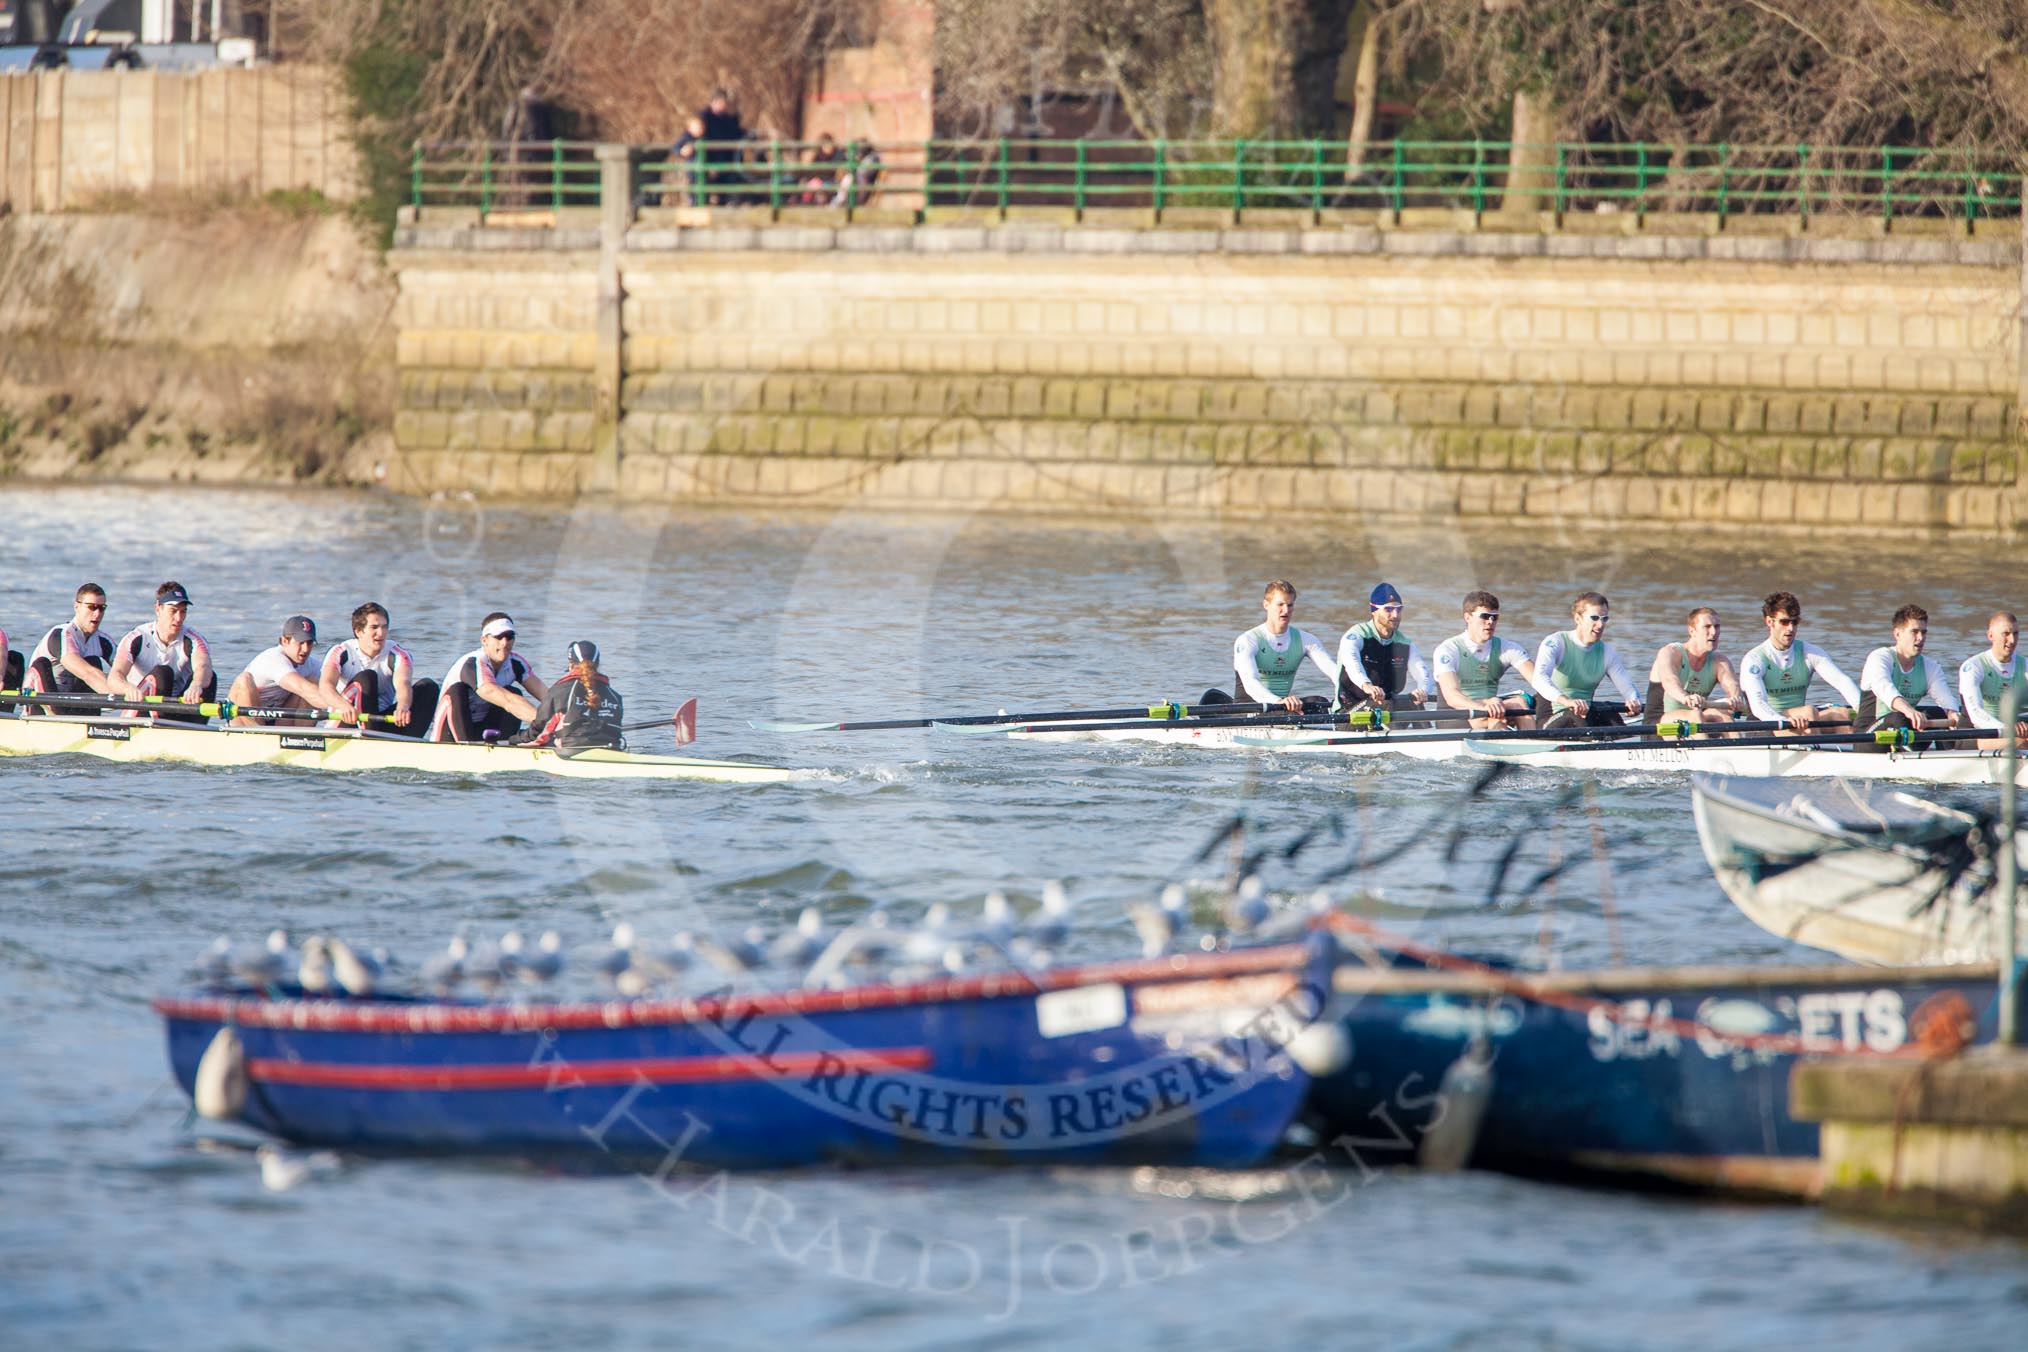 The Boat Race season 2013 - fixture CUBC vs Leander.
River Thames Tideway between Putney Bridge and Mortlake,
London SW15,

United Kingdom,
on 02 March 2013 at 15:58, image #140